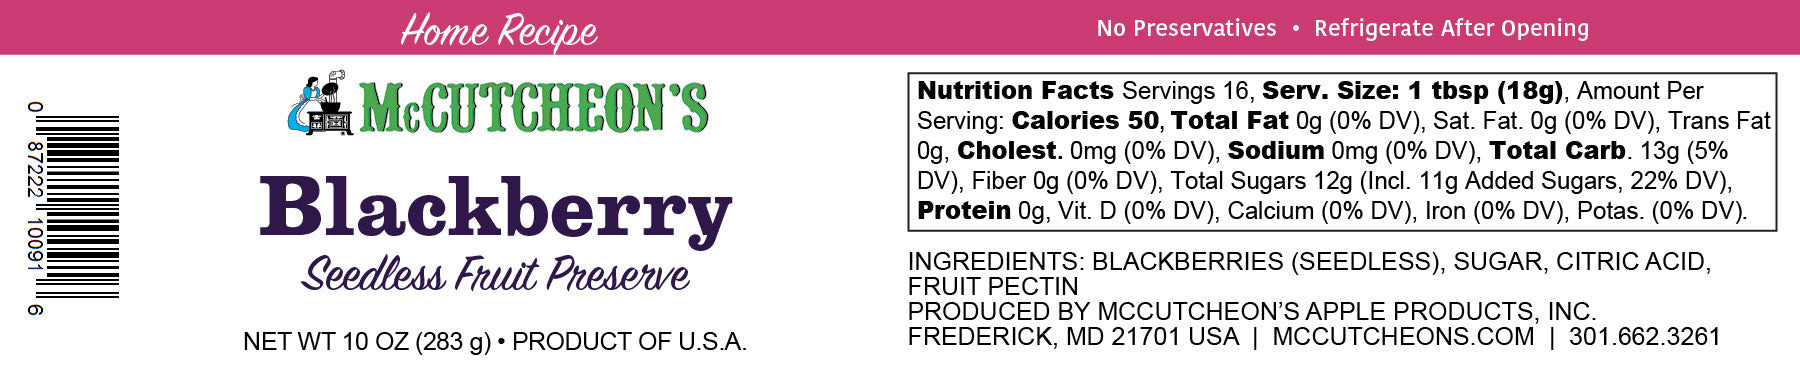 nutritional label for McCutcheon's mini blackberry preserves